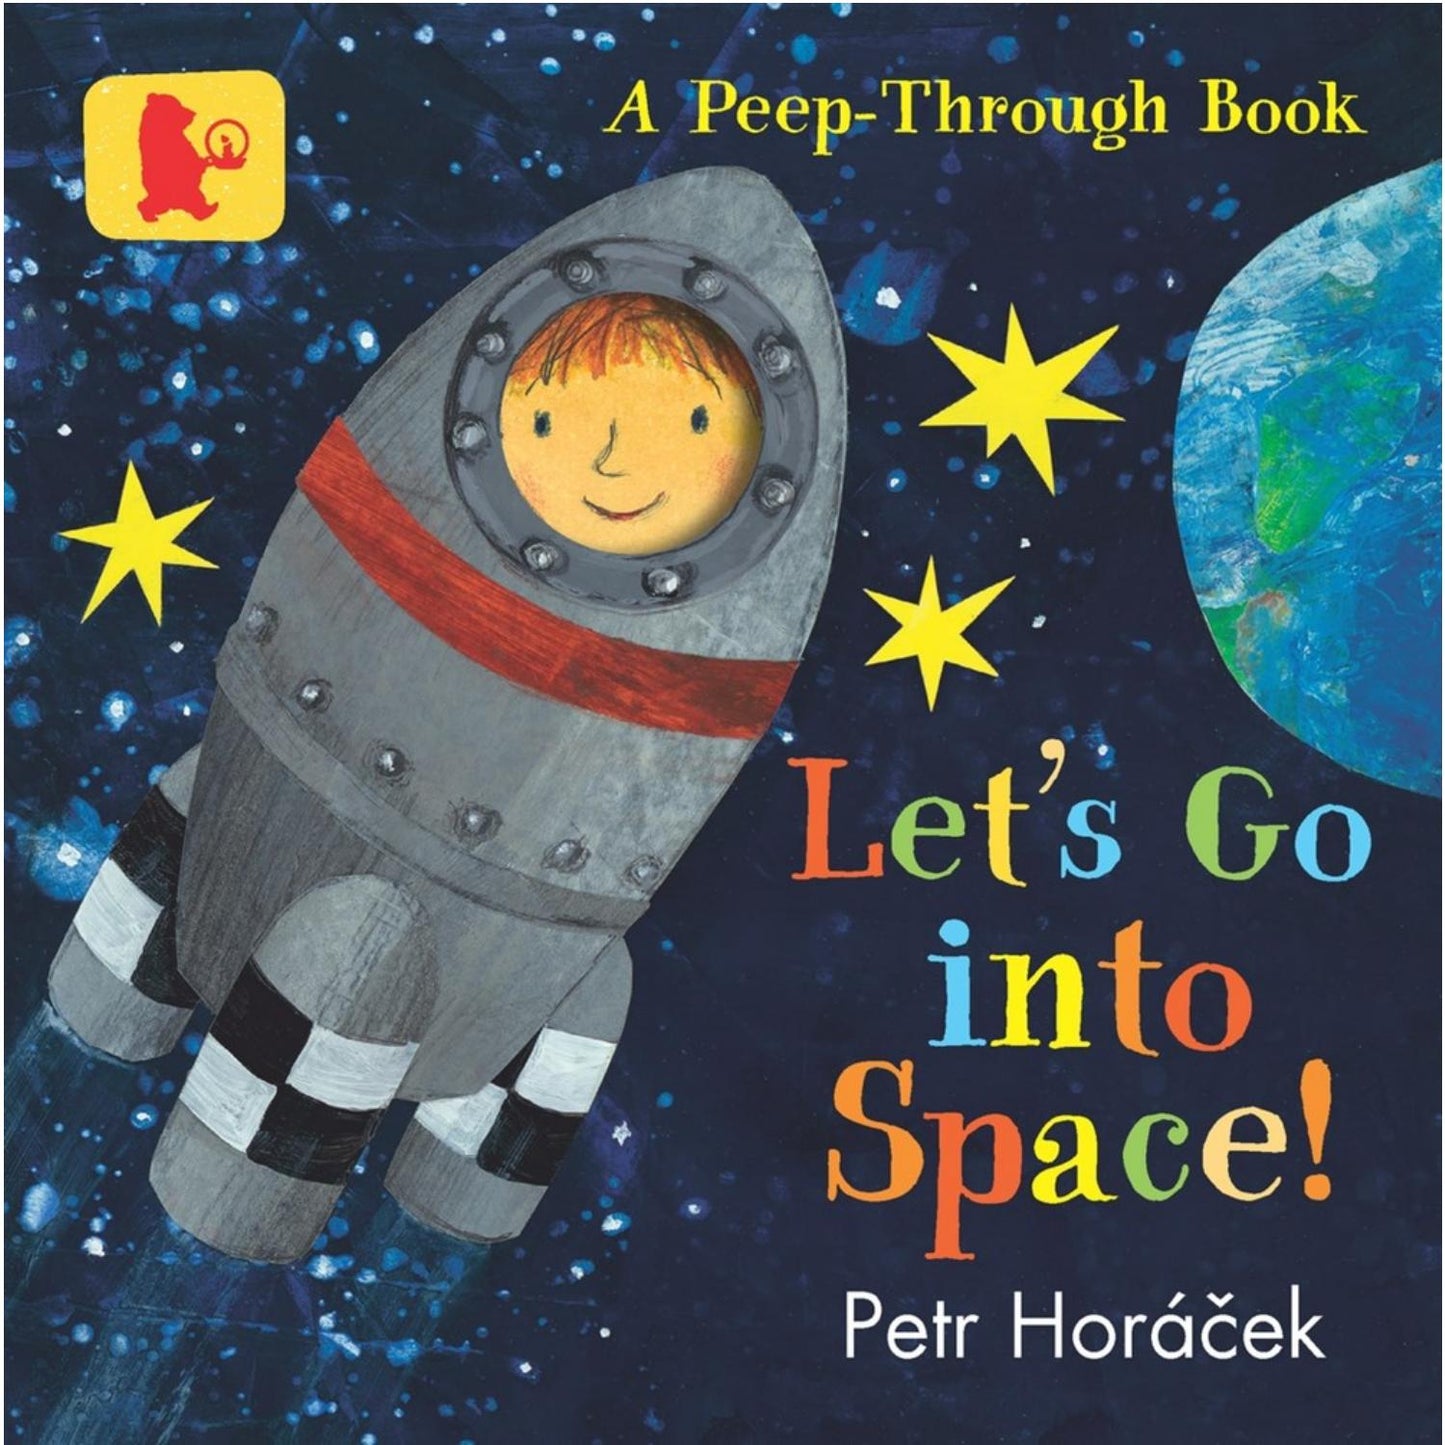 Let's Go into Space! | Board Book | Children’s Book on Aeronautics & Space